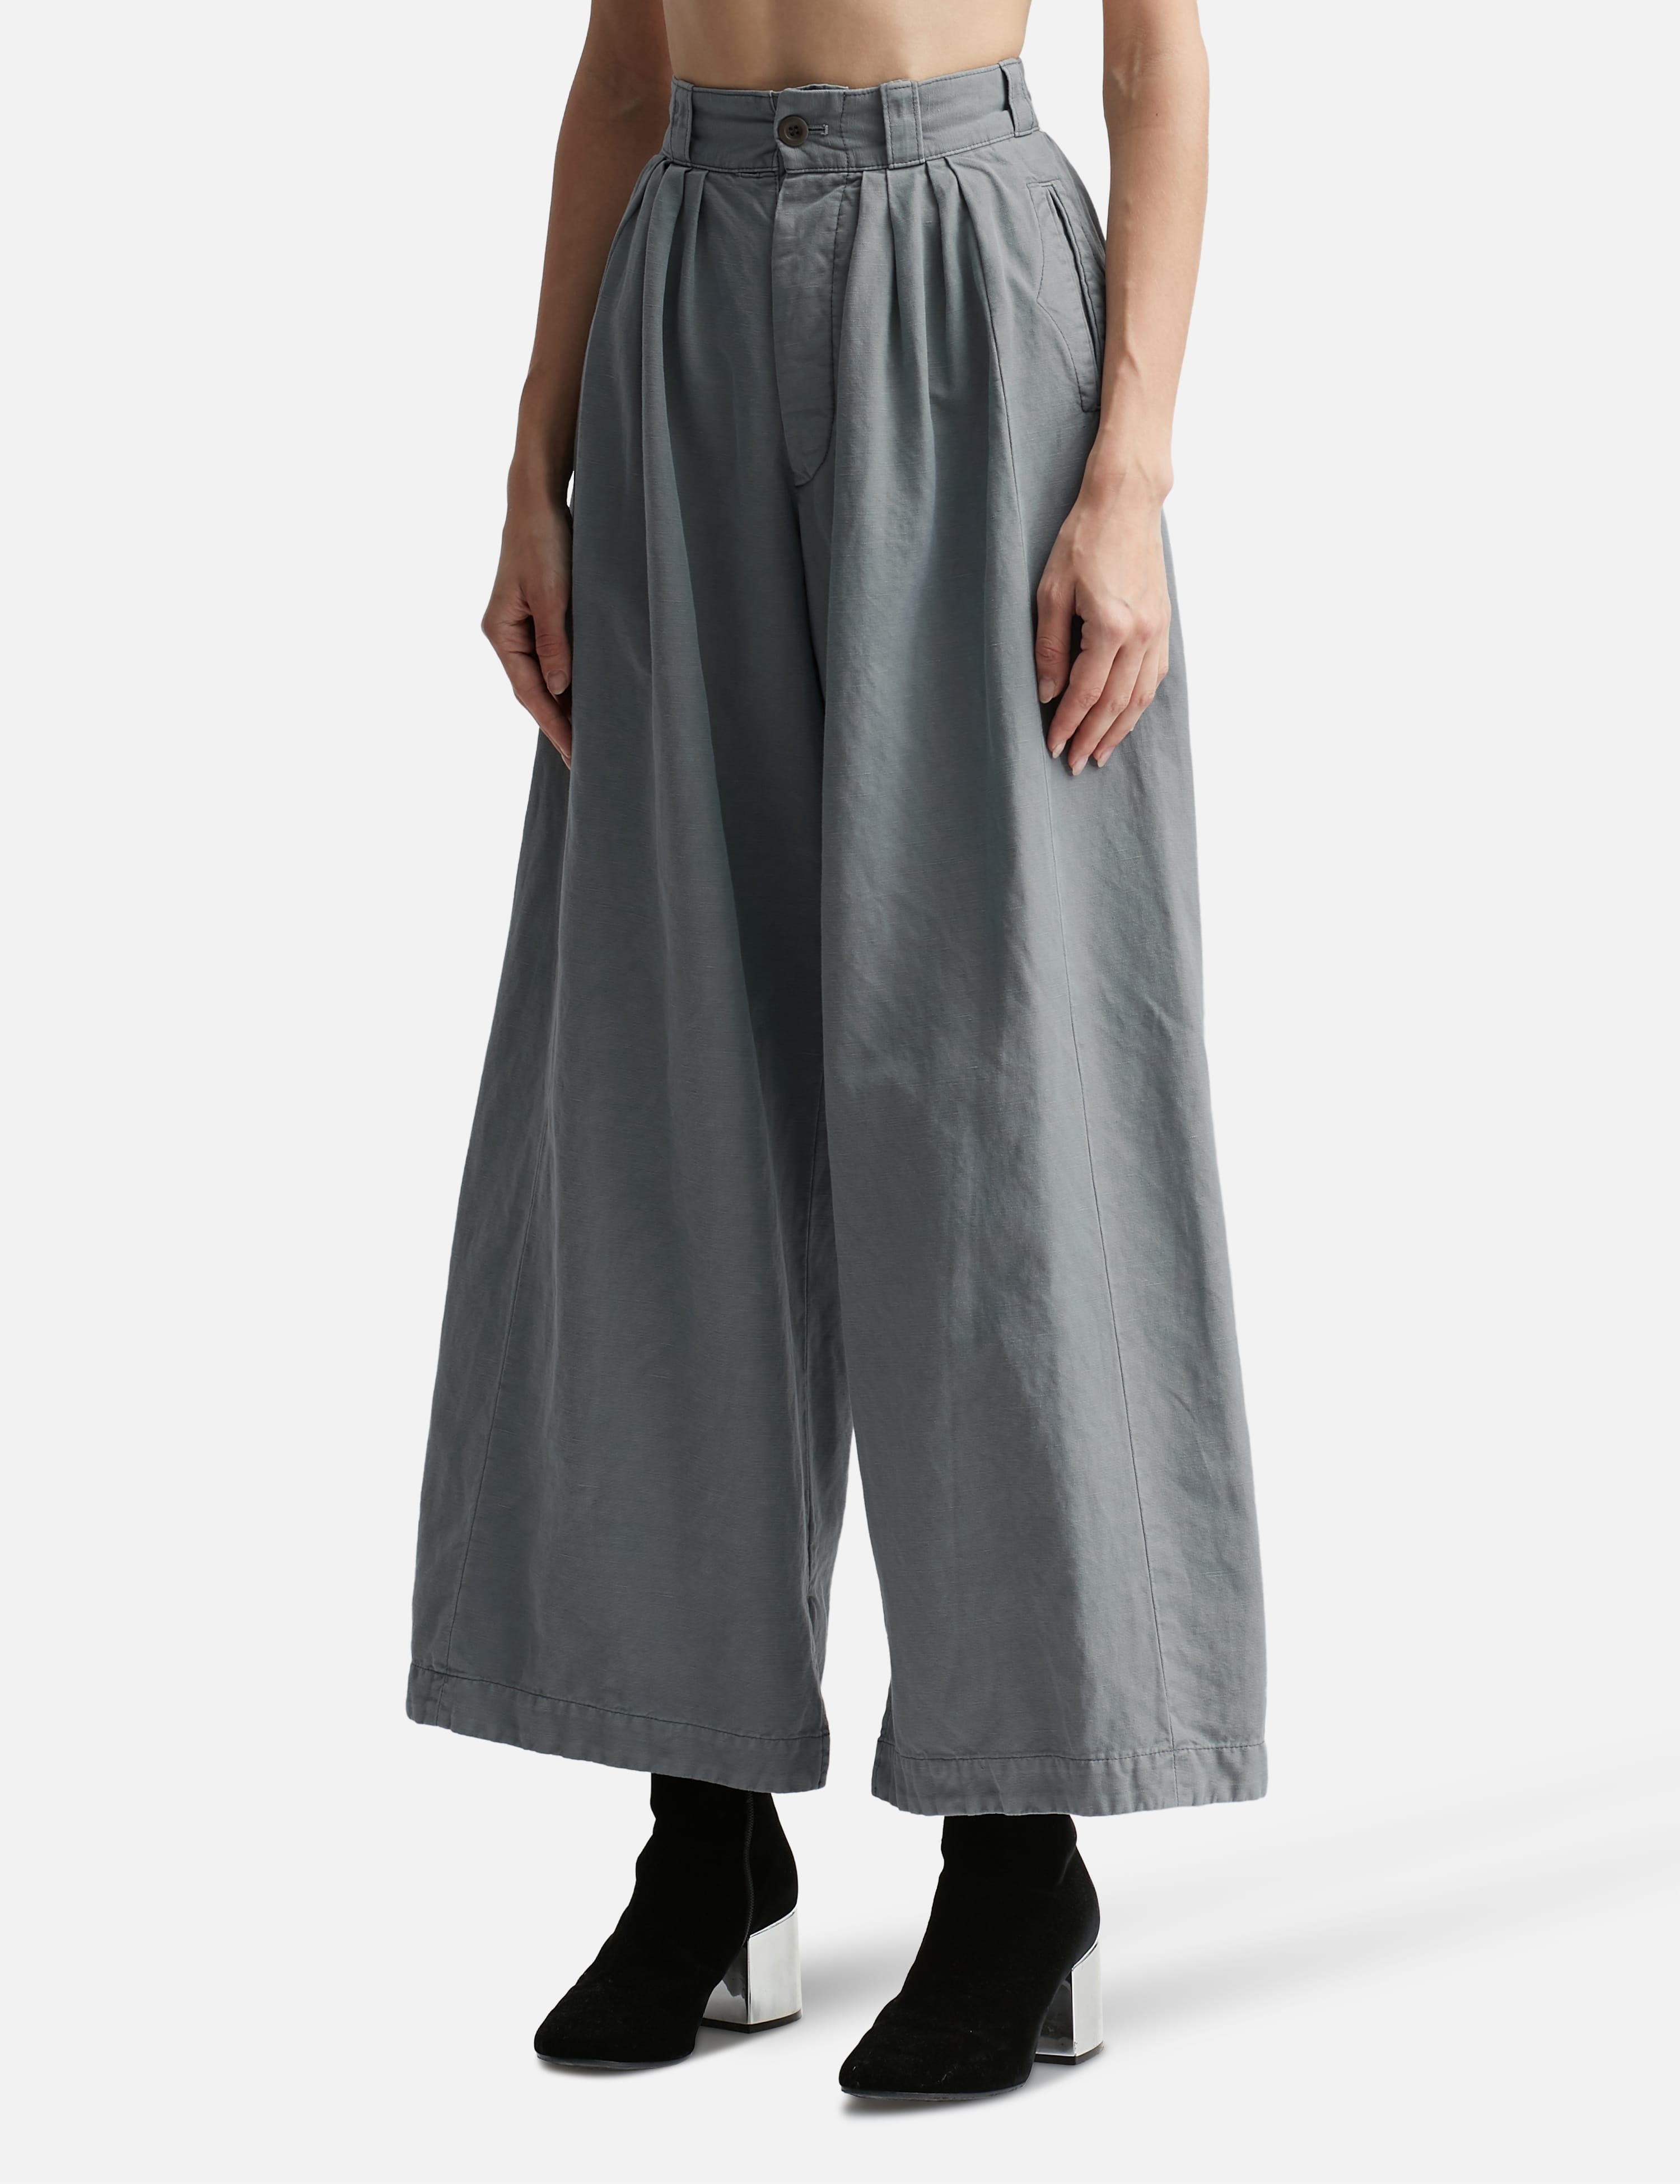 UK Women Cotton Linen Trousers Ladies Summer Casual Elastic Waist Bottoms  Pants | eBay